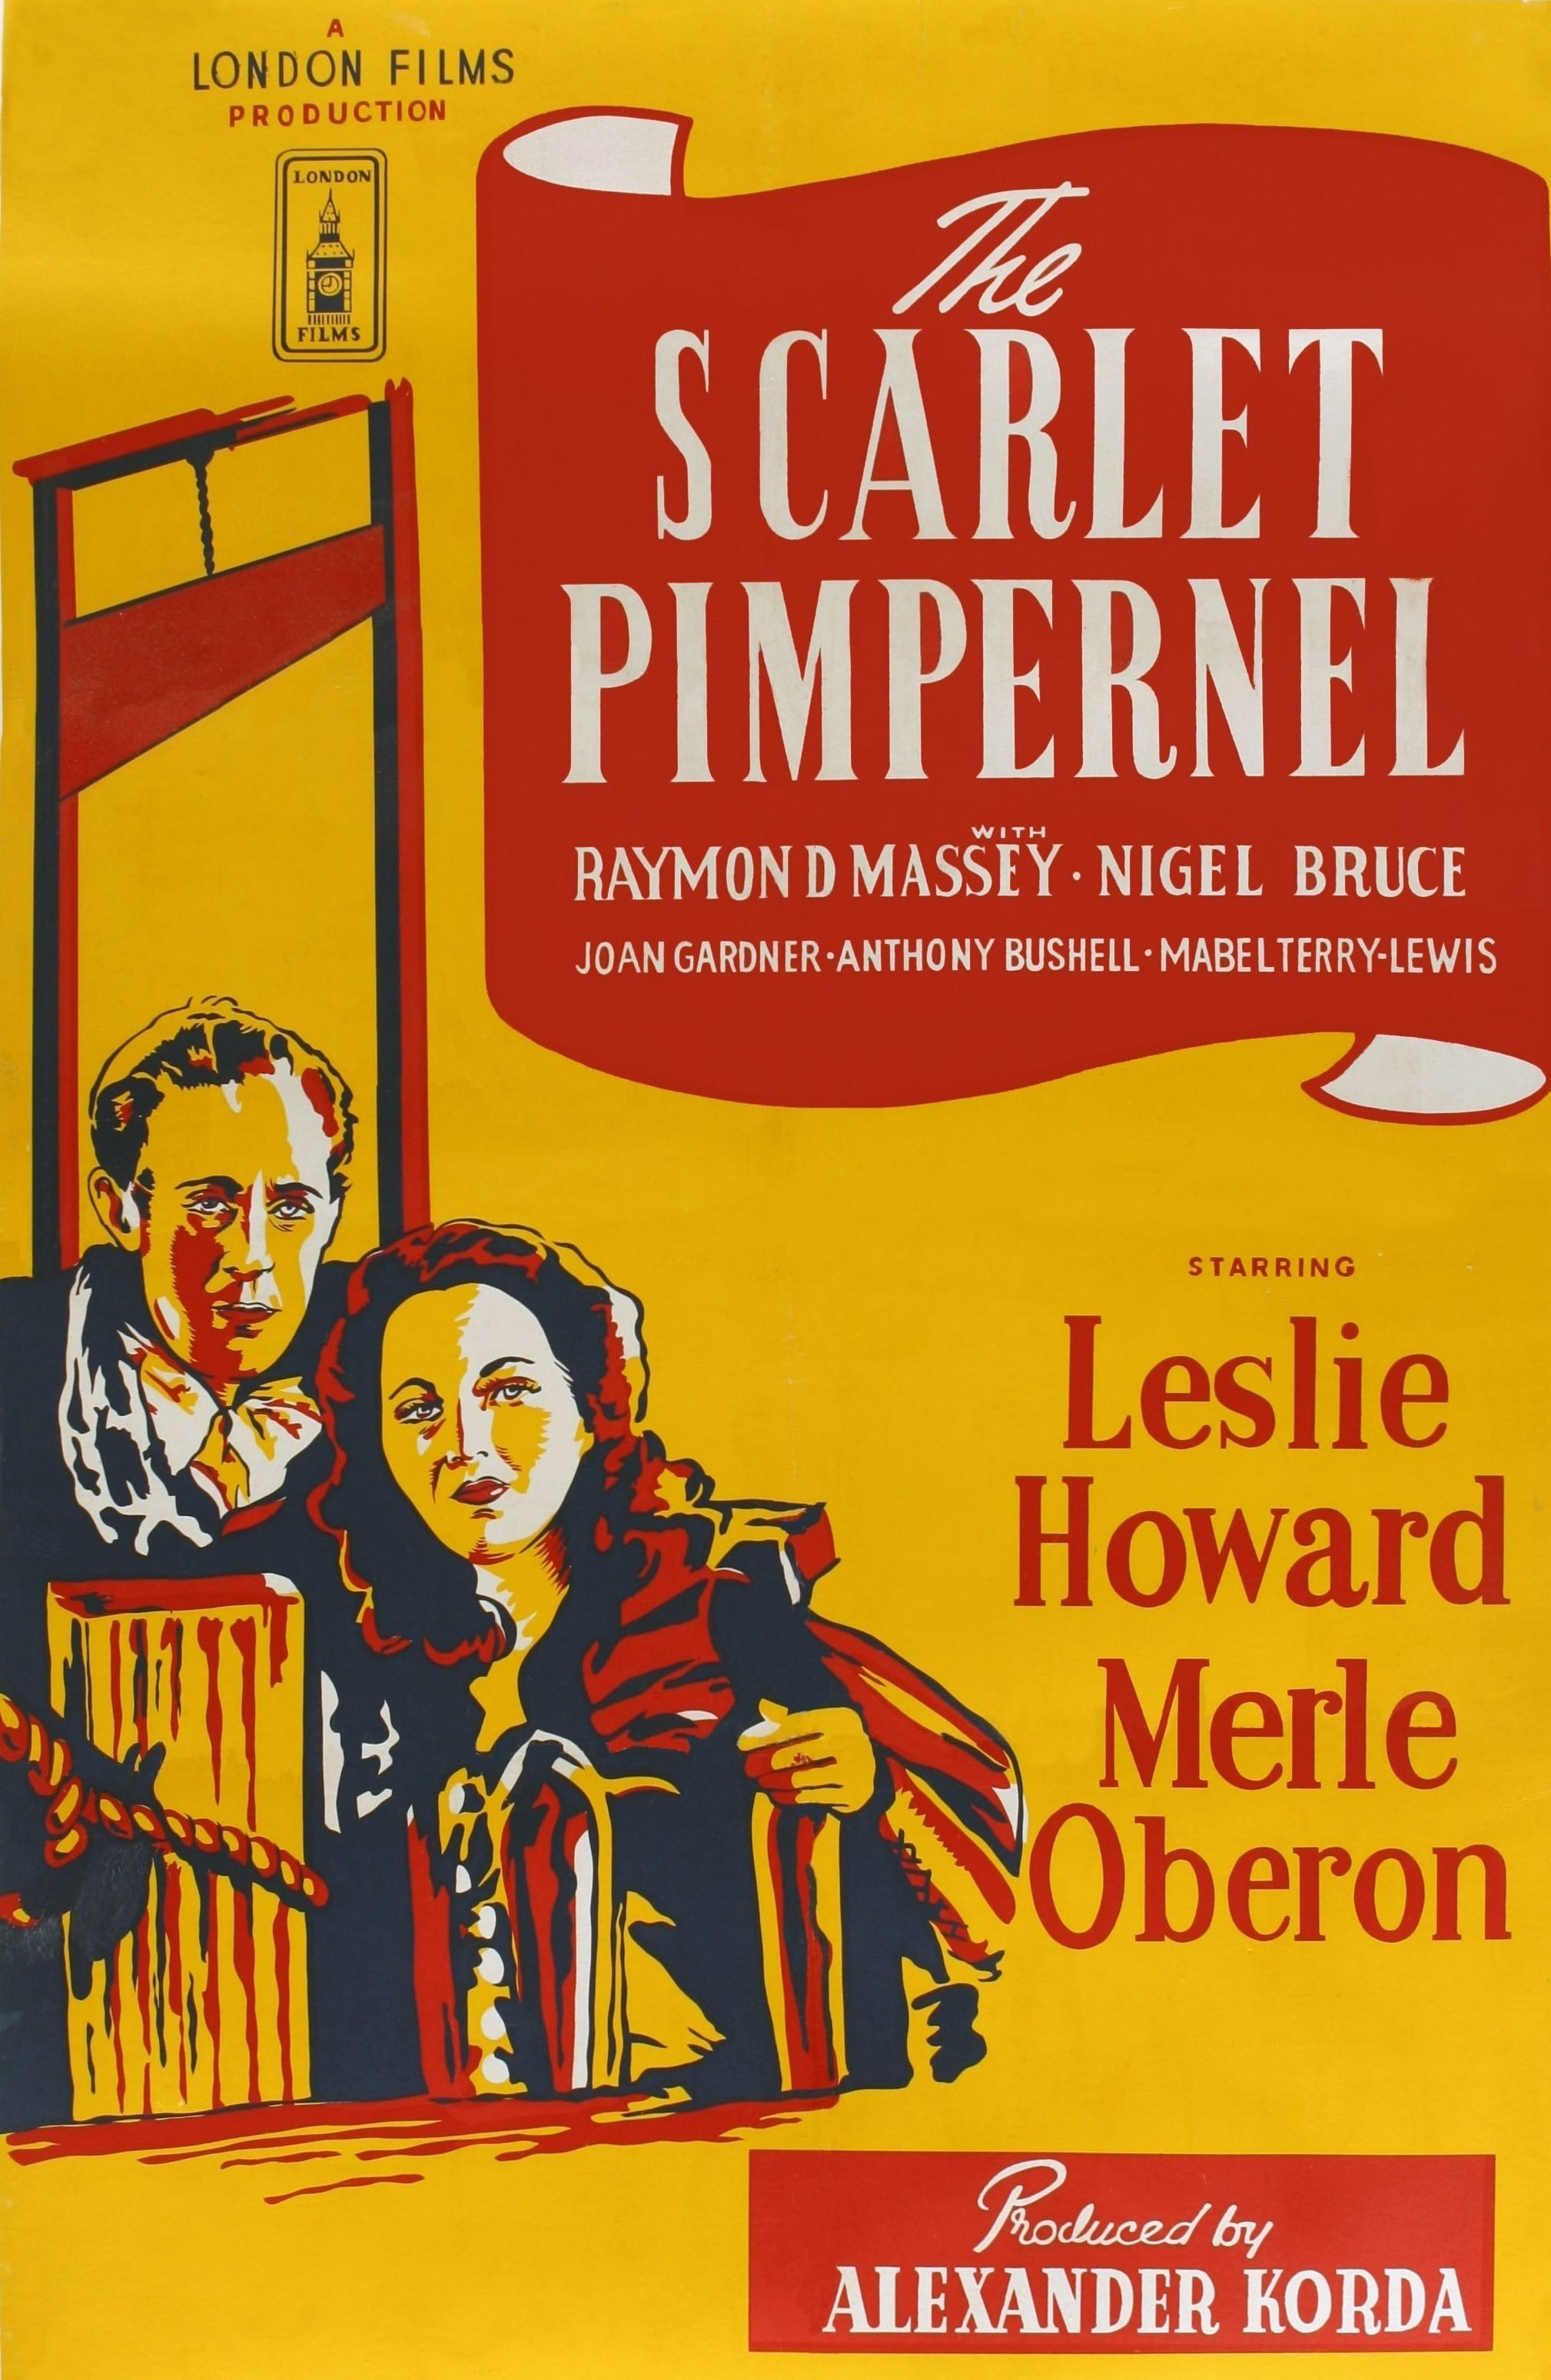 The Scarlet Pimpernel (1934) Movie Poster